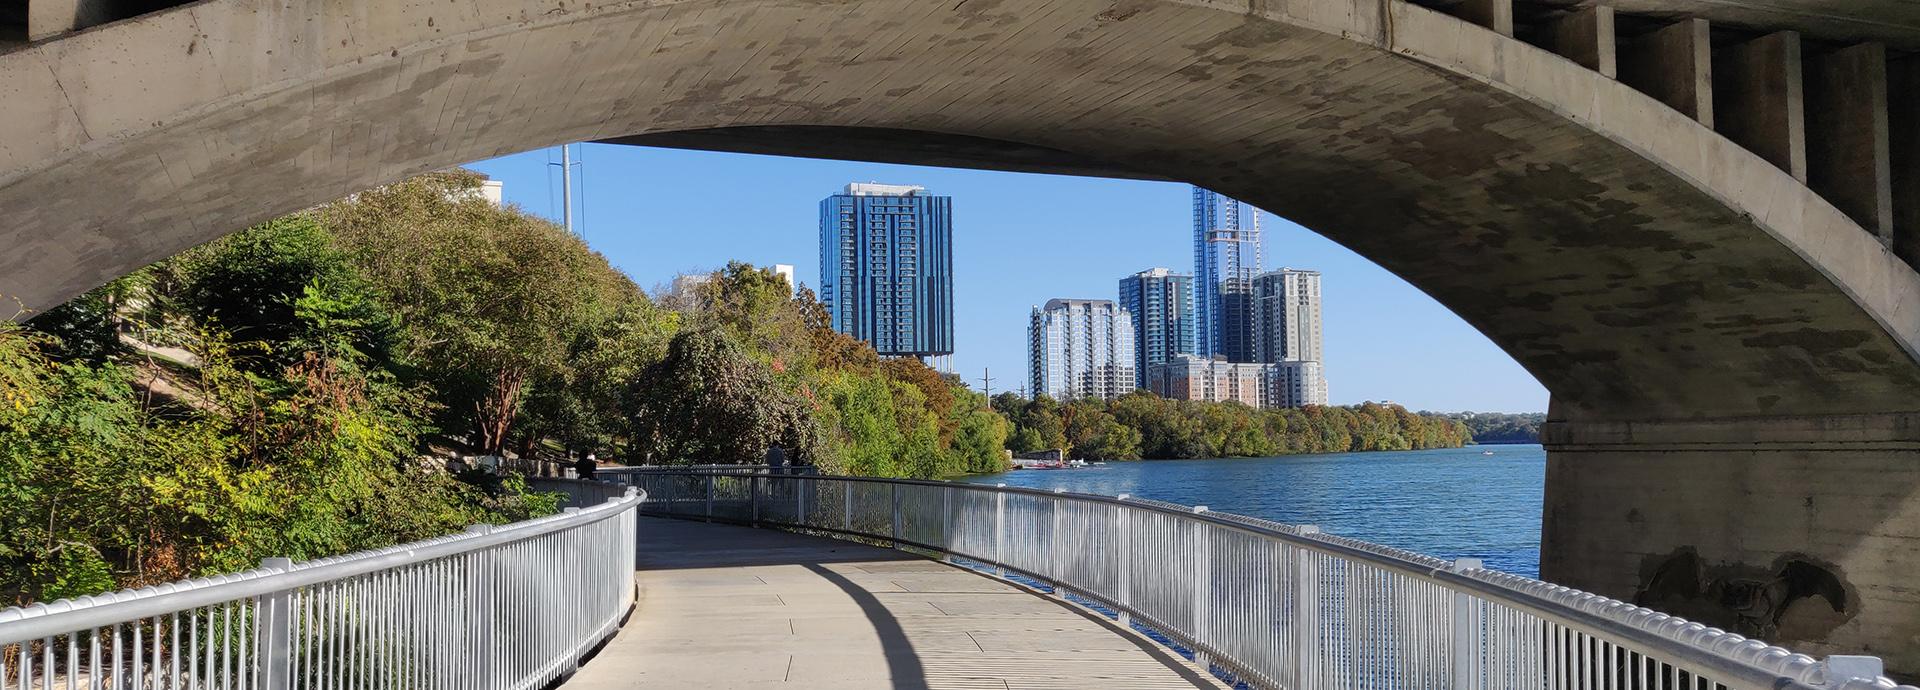 A view of skyline of Austin, Texas. The photo is taken under a bridge.